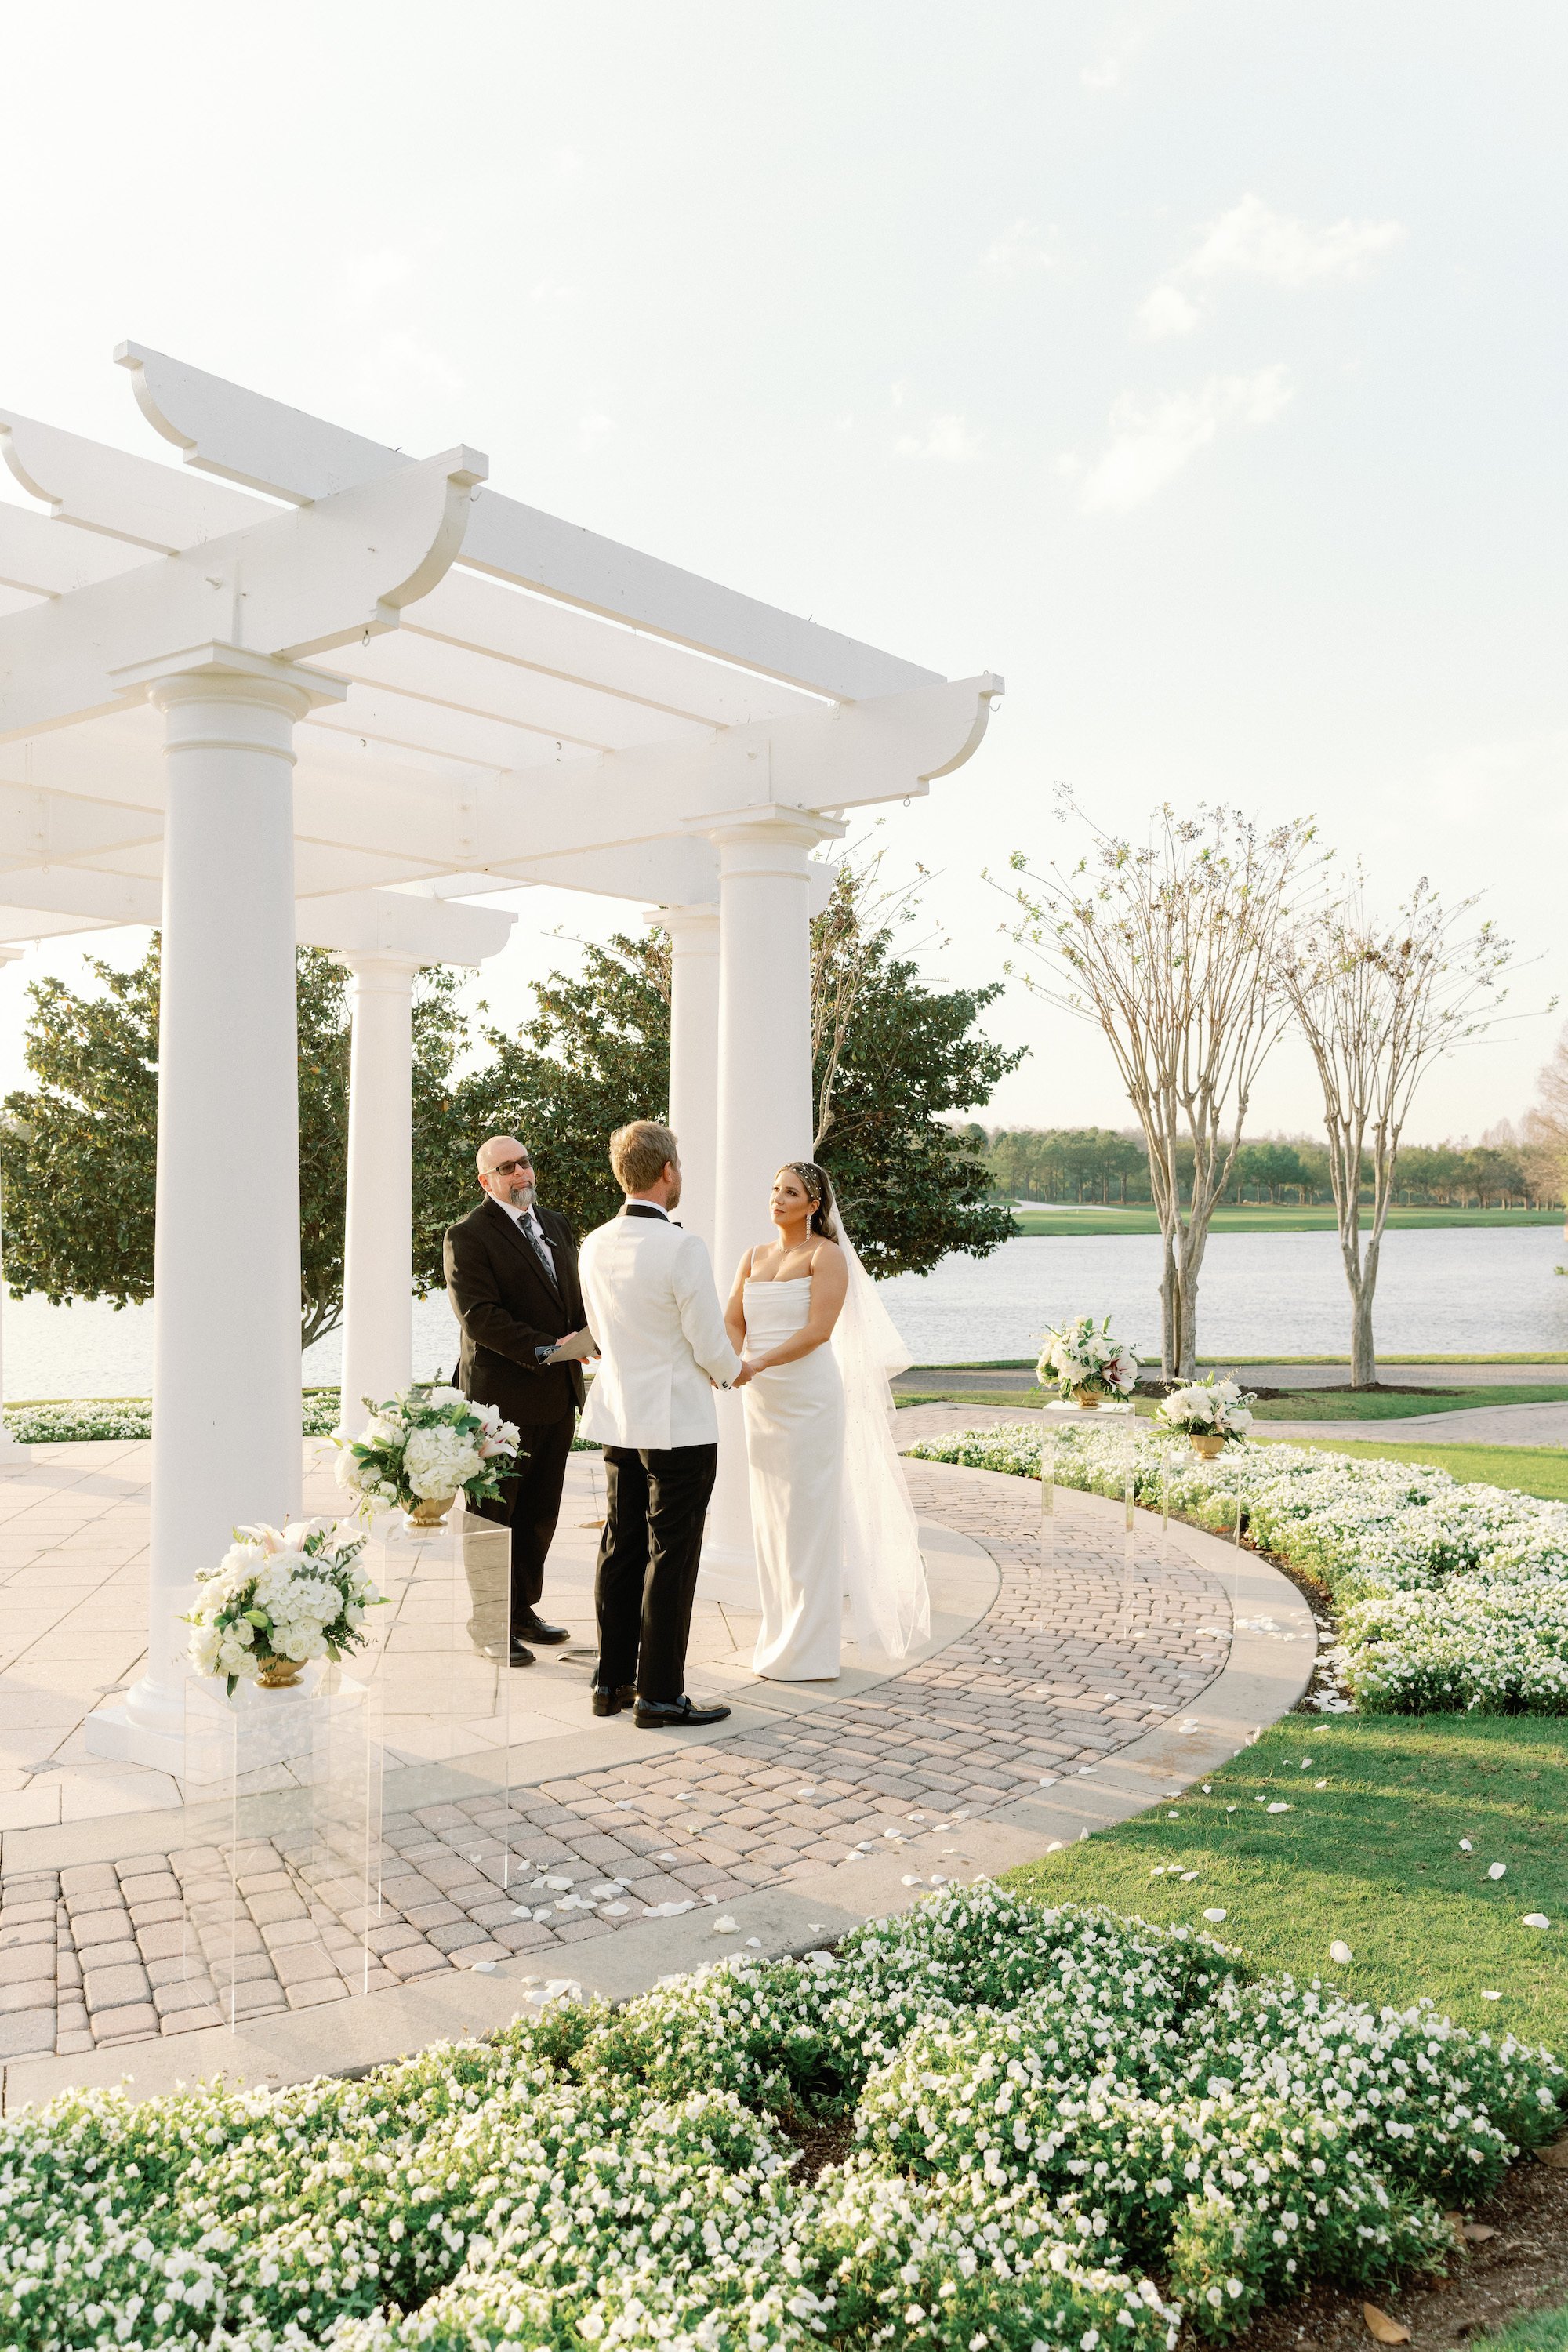 21Timeless White Courtyard Wedding | Ritz Carlton Orlando | Photographers Dewitt for Love Photography.jpg